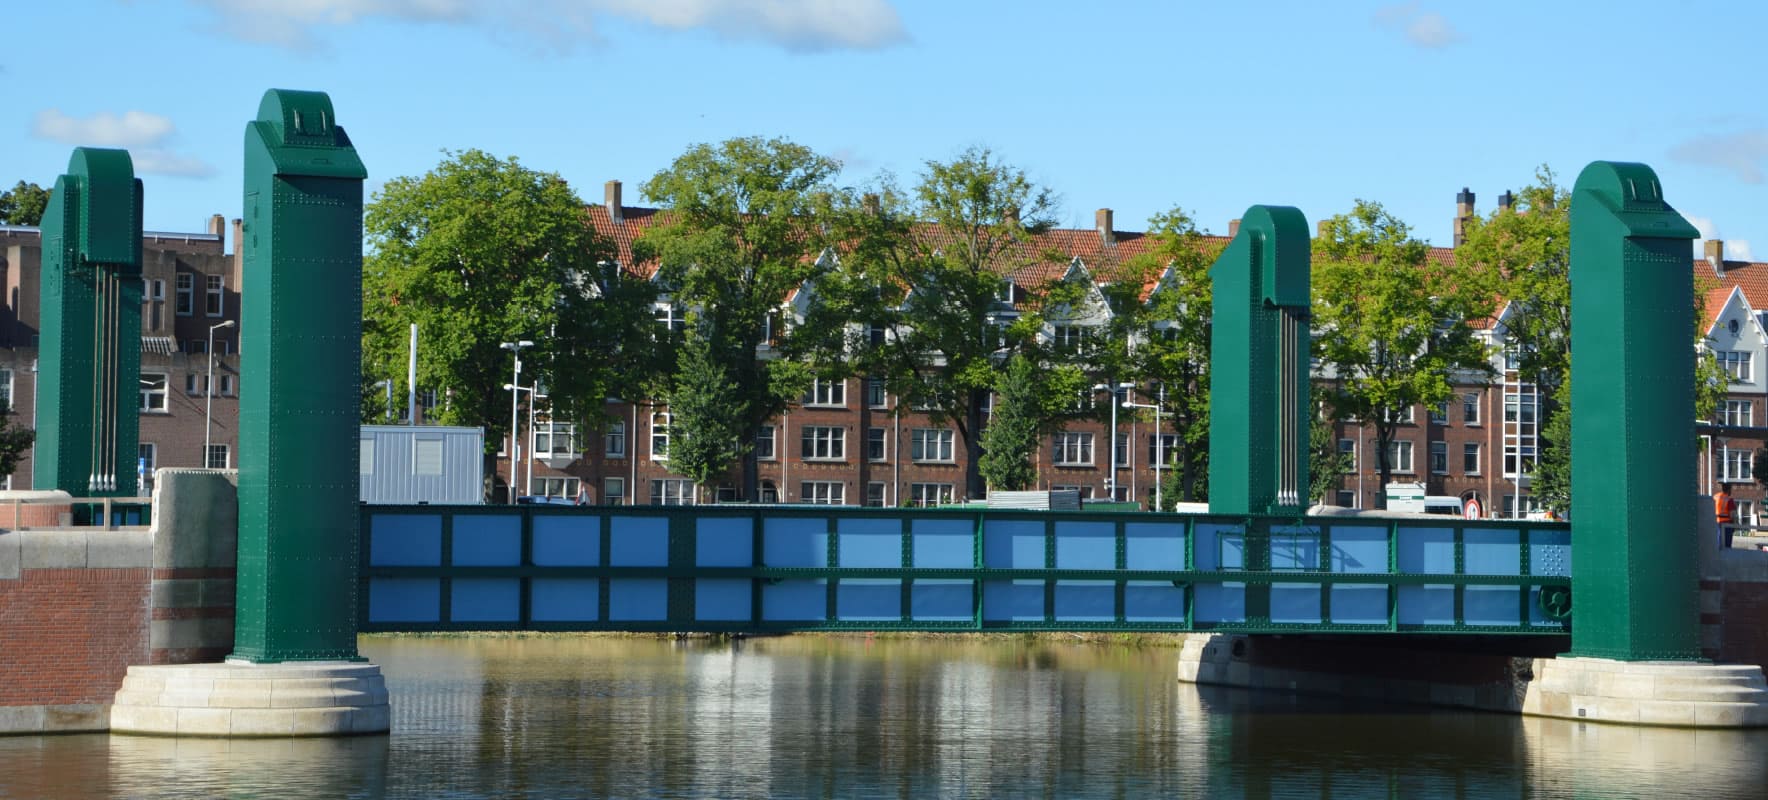 The Gevle Bridge, The Netherlands